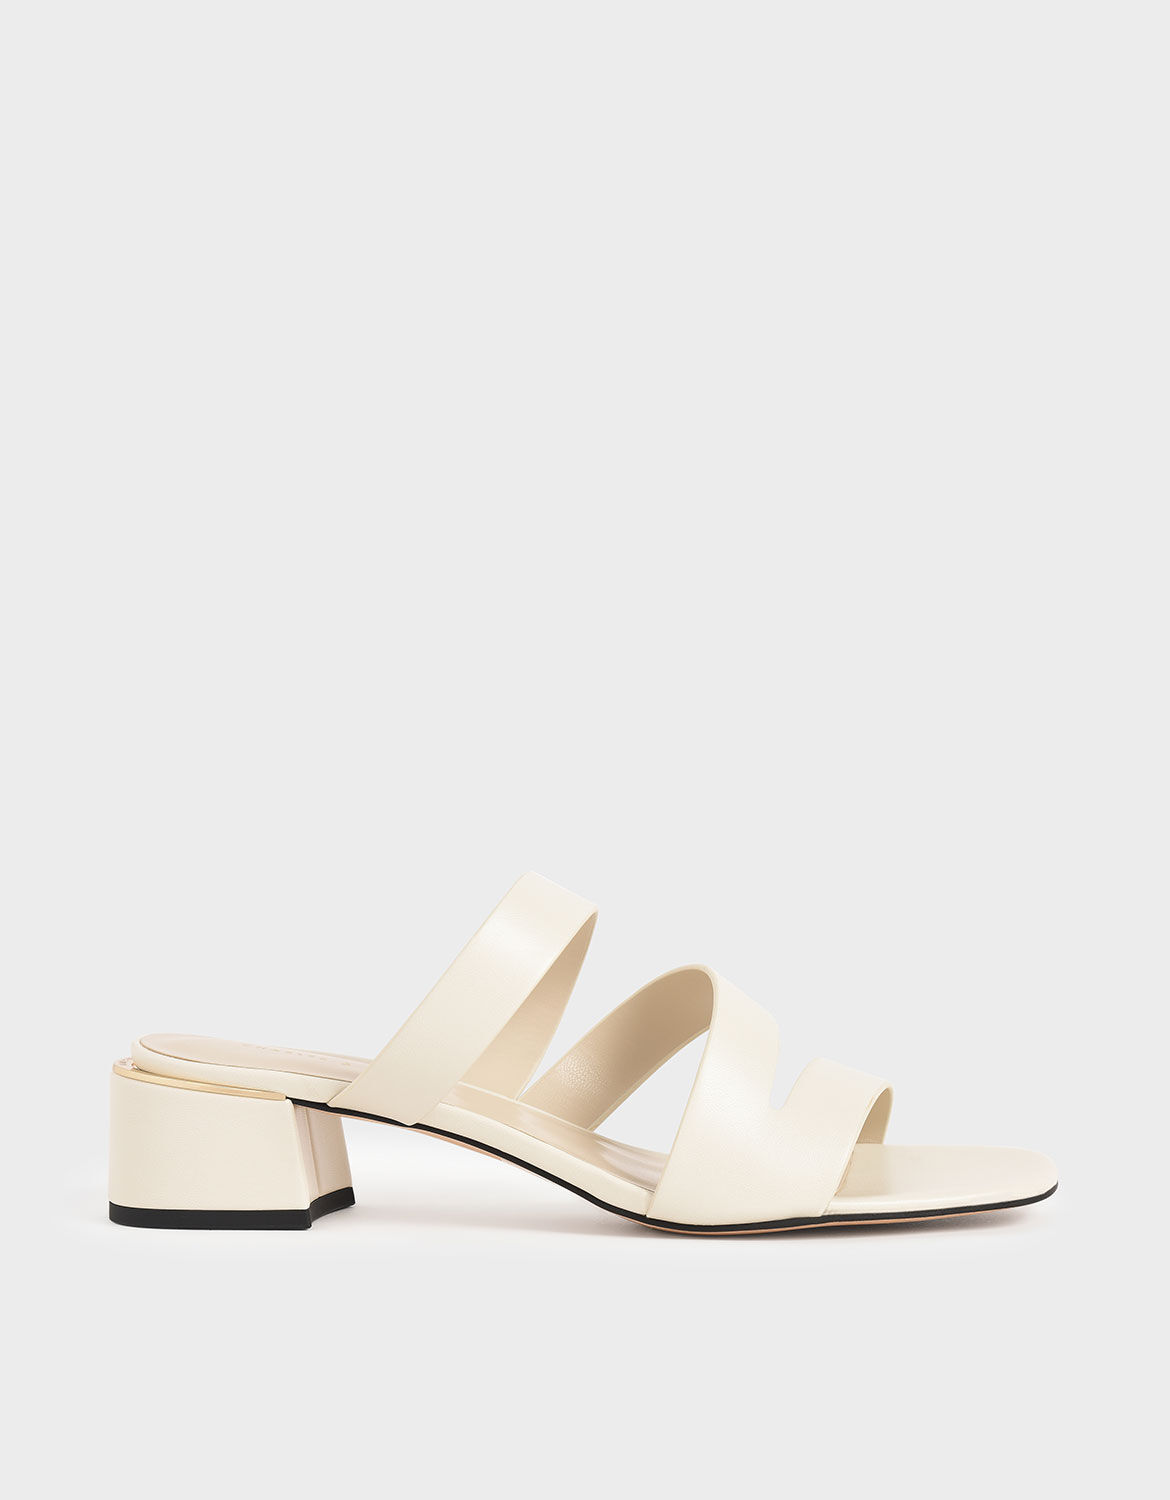 strappy white block heels